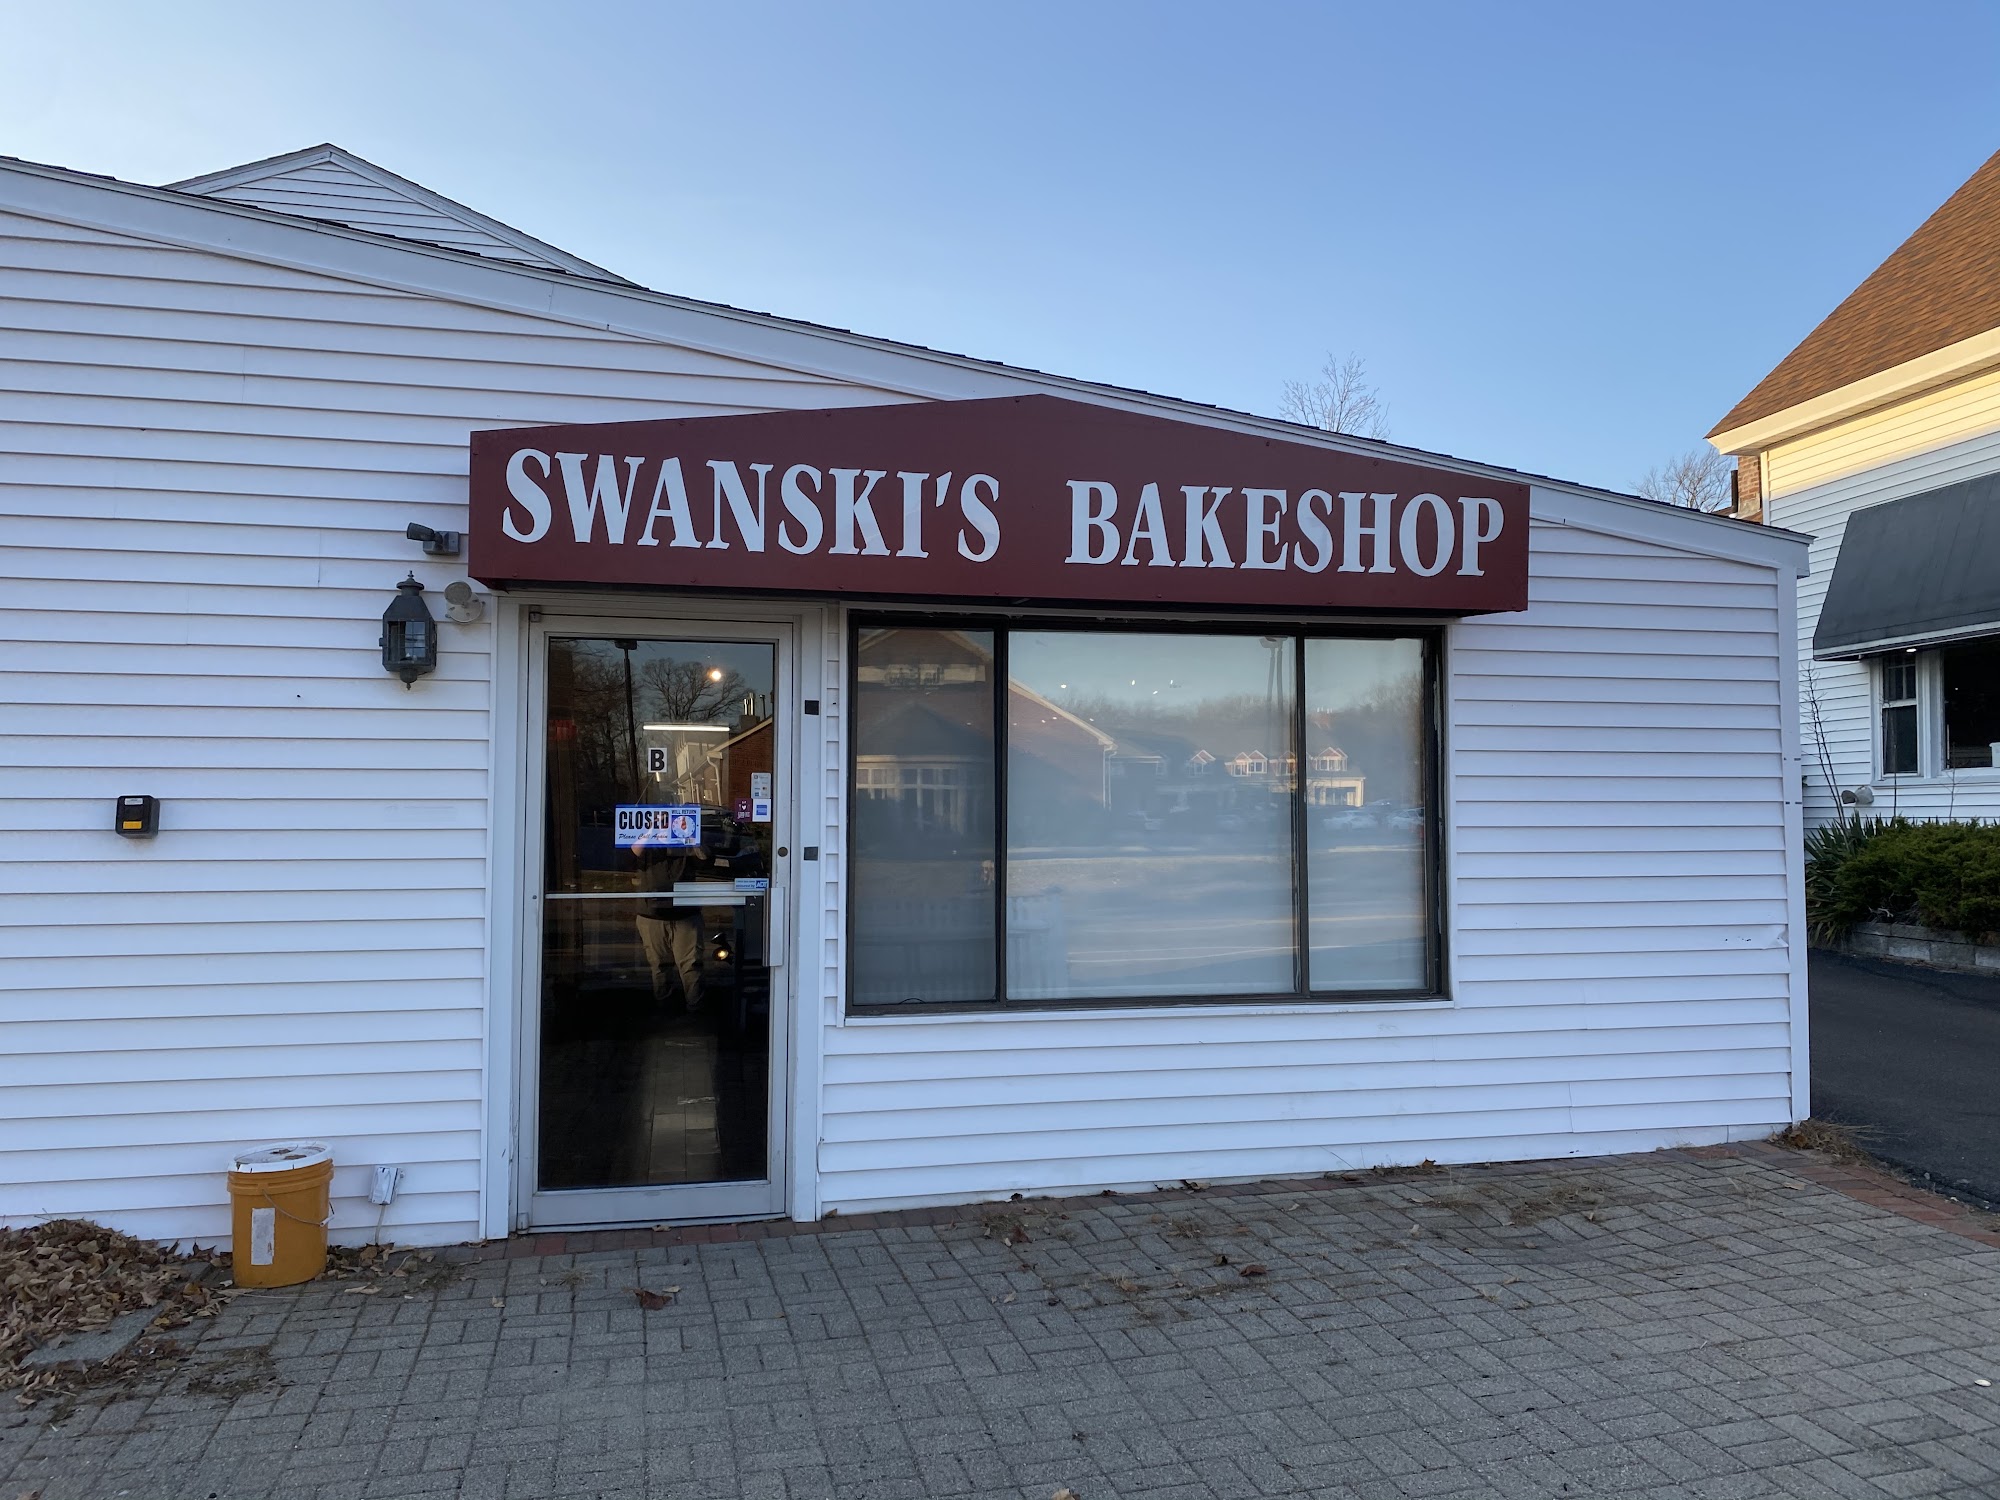 Swanski's Bakeshop